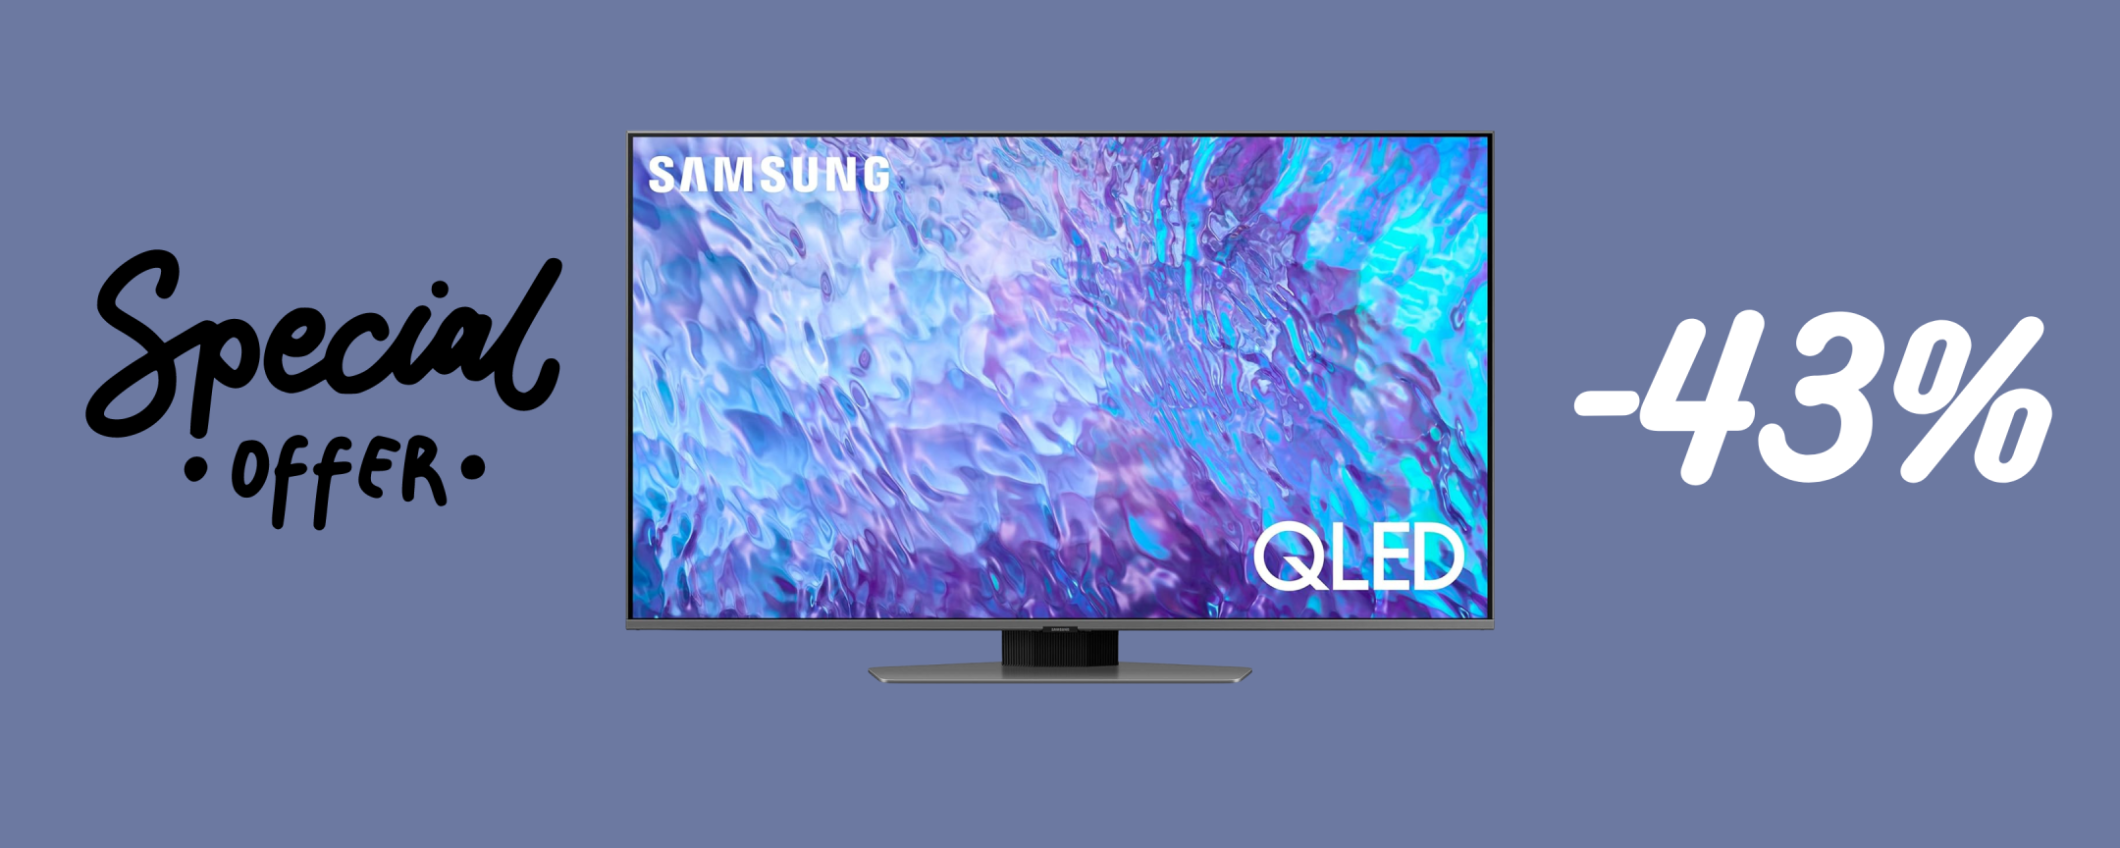 Smart TV Samsung 50